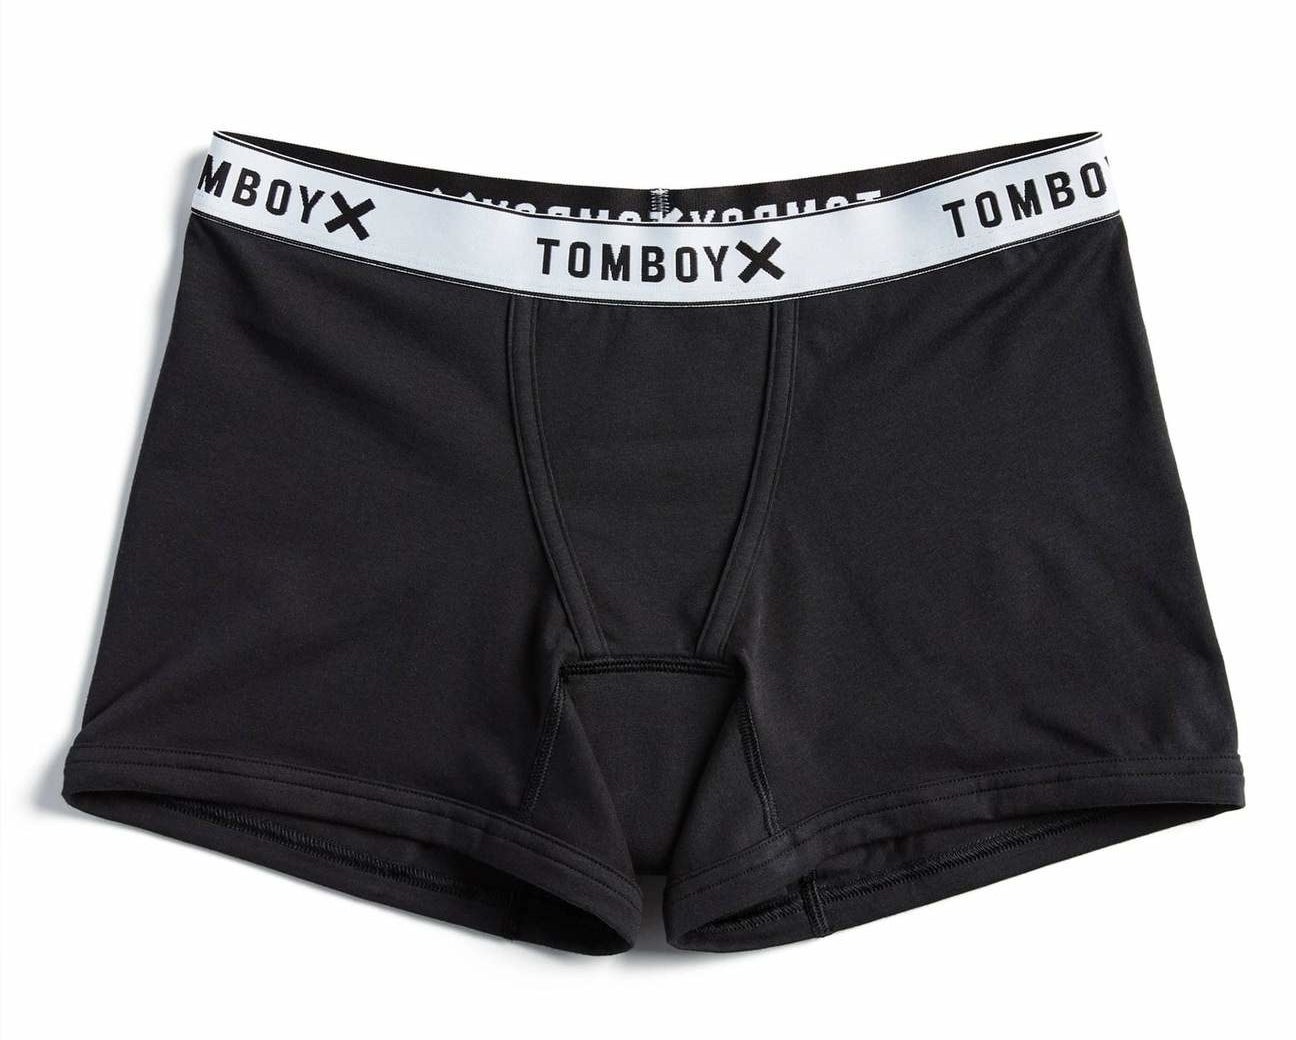 The black trunks with logo waistband